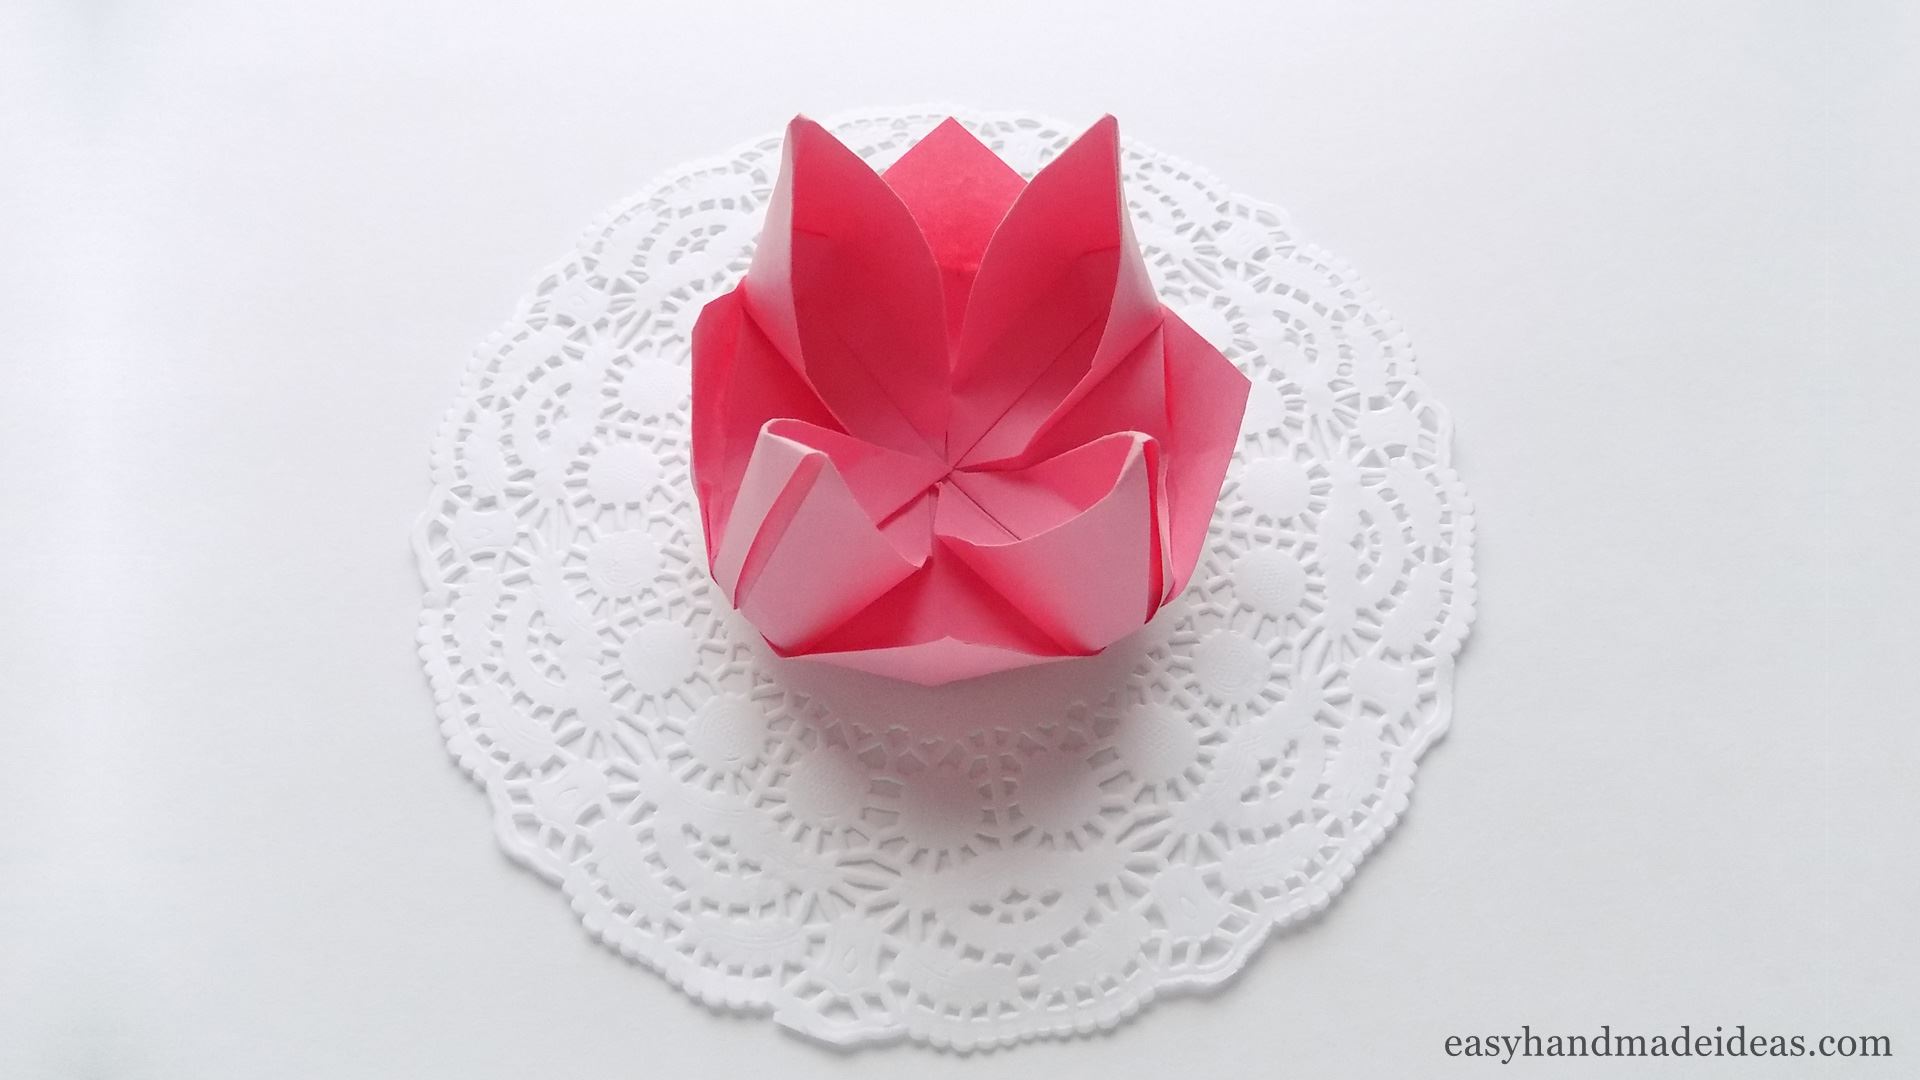 Origami lotus flower